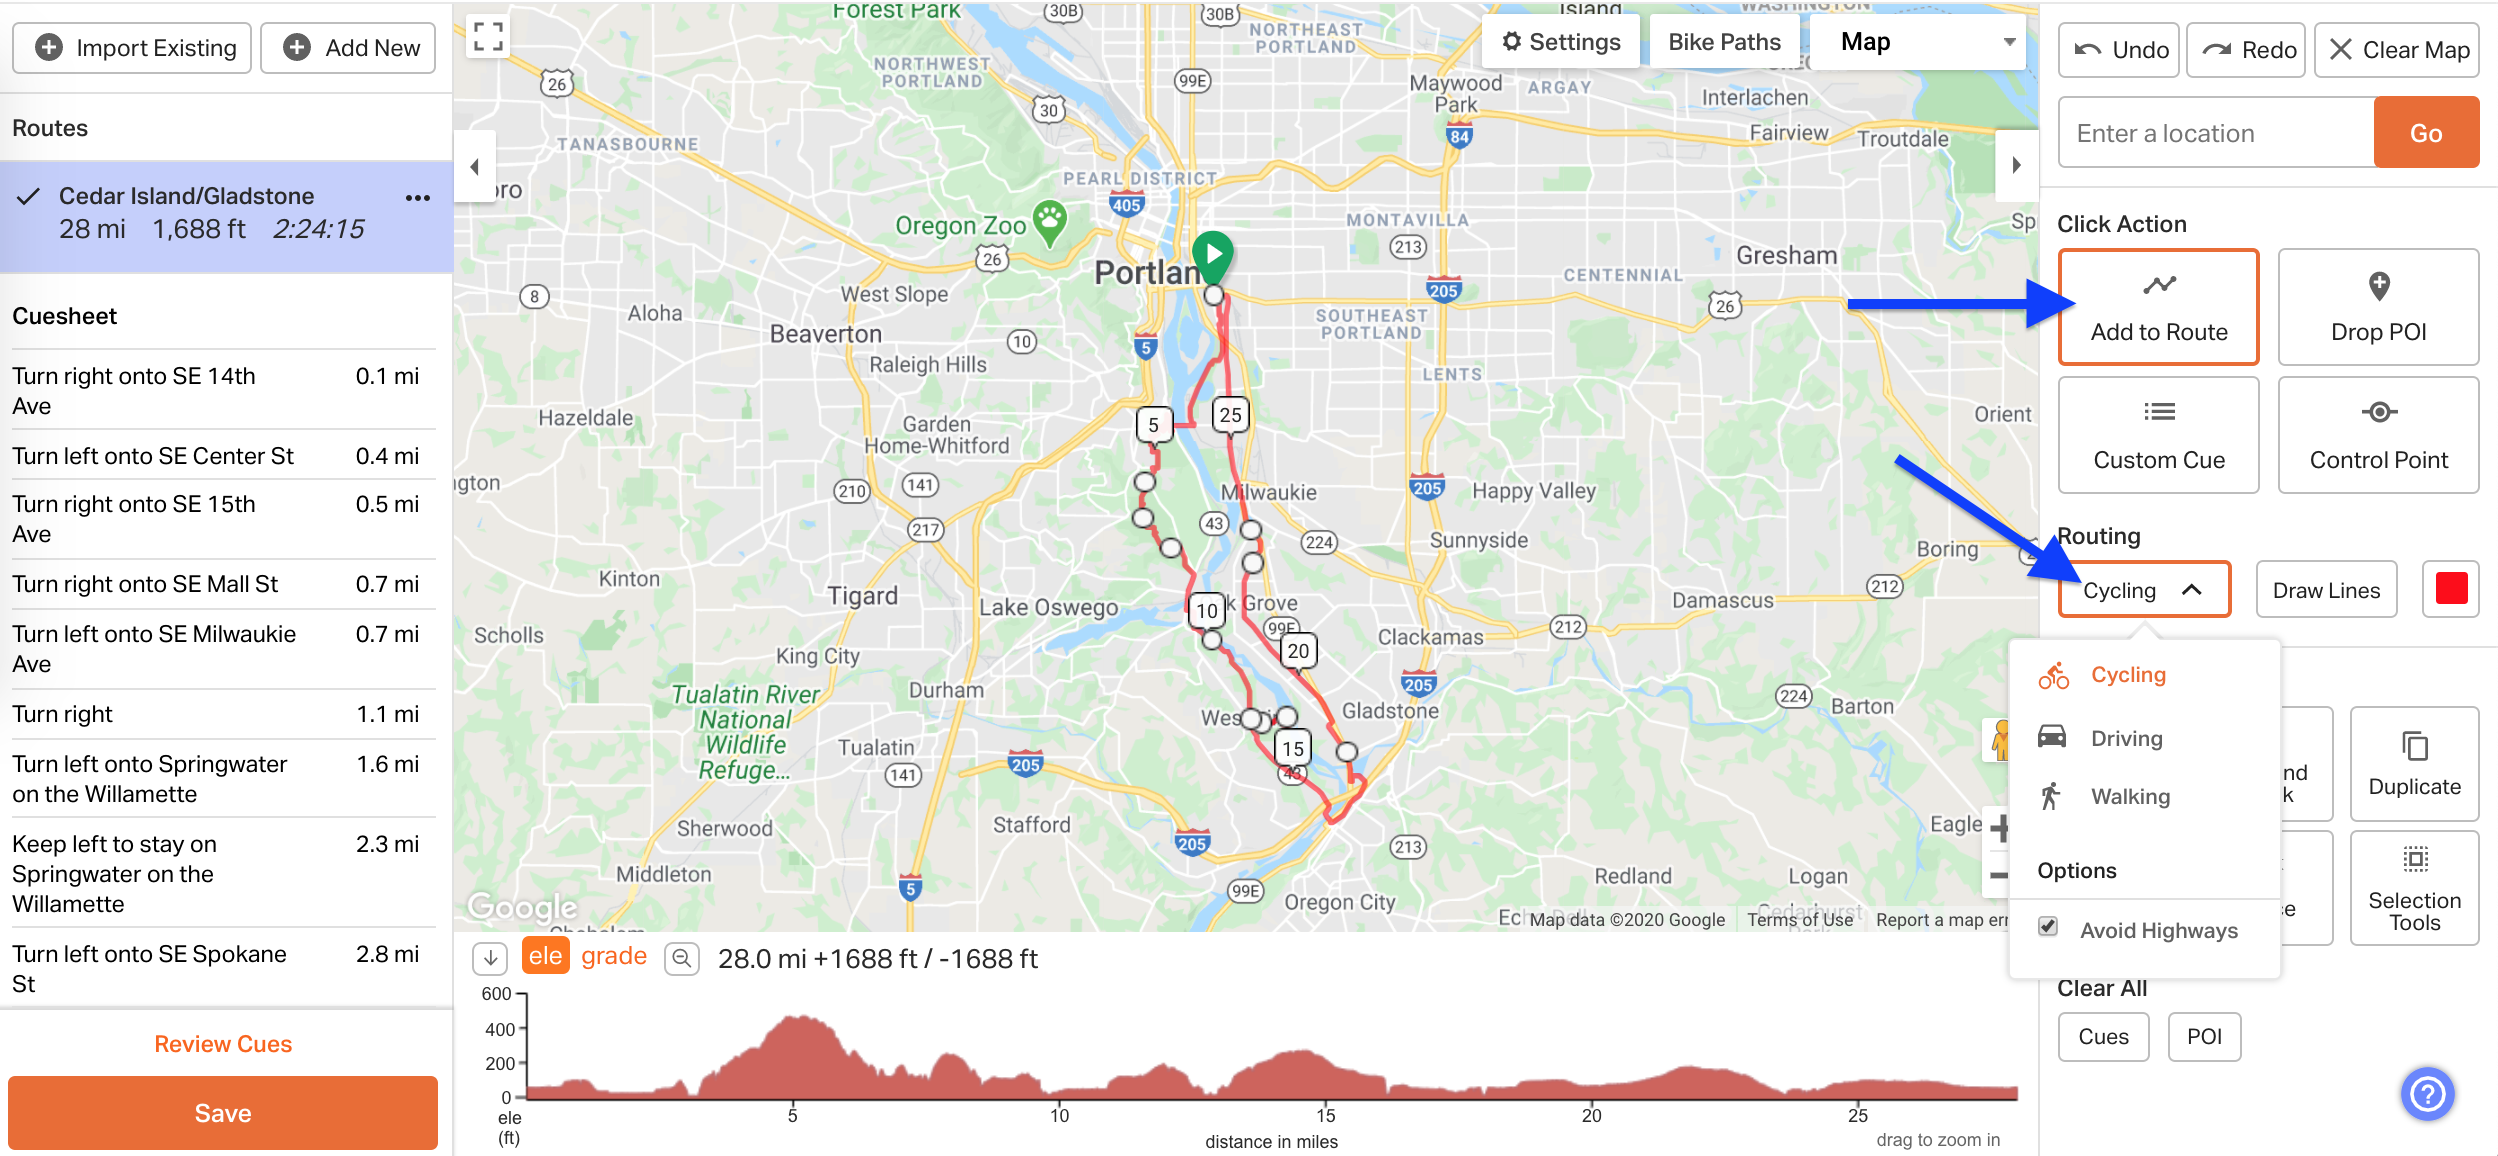 mountain bike road trip planner